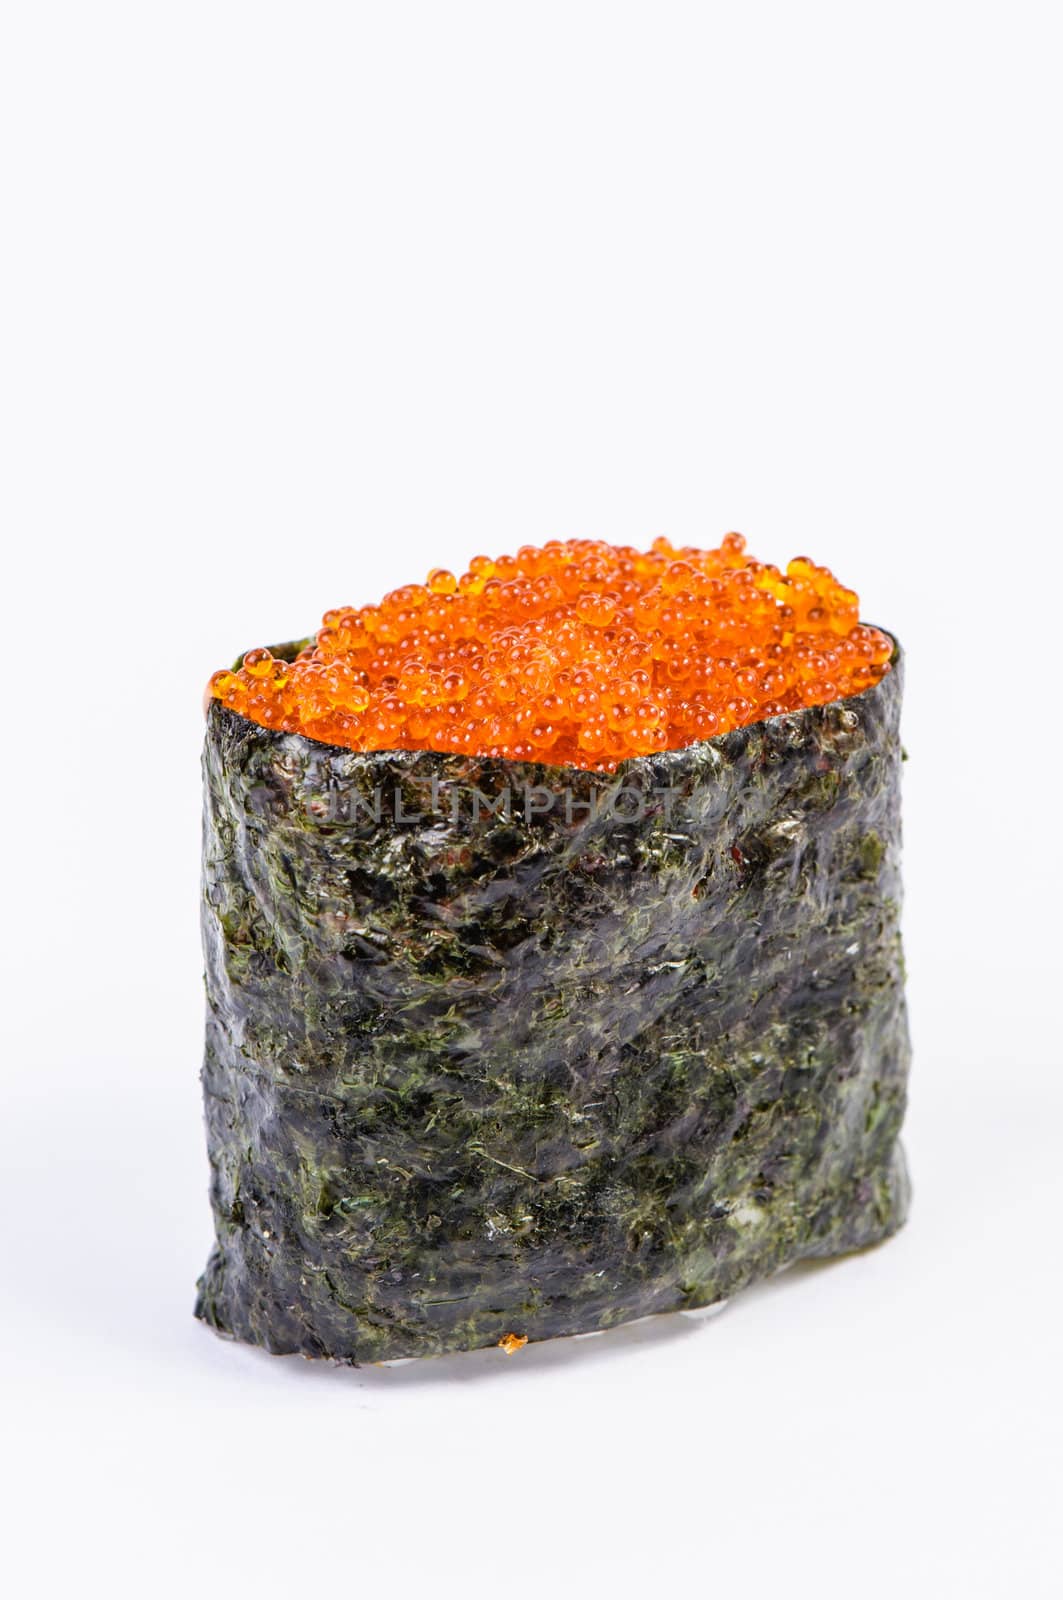 Tobiko Gunkan Sushi with Fish Roe on white background